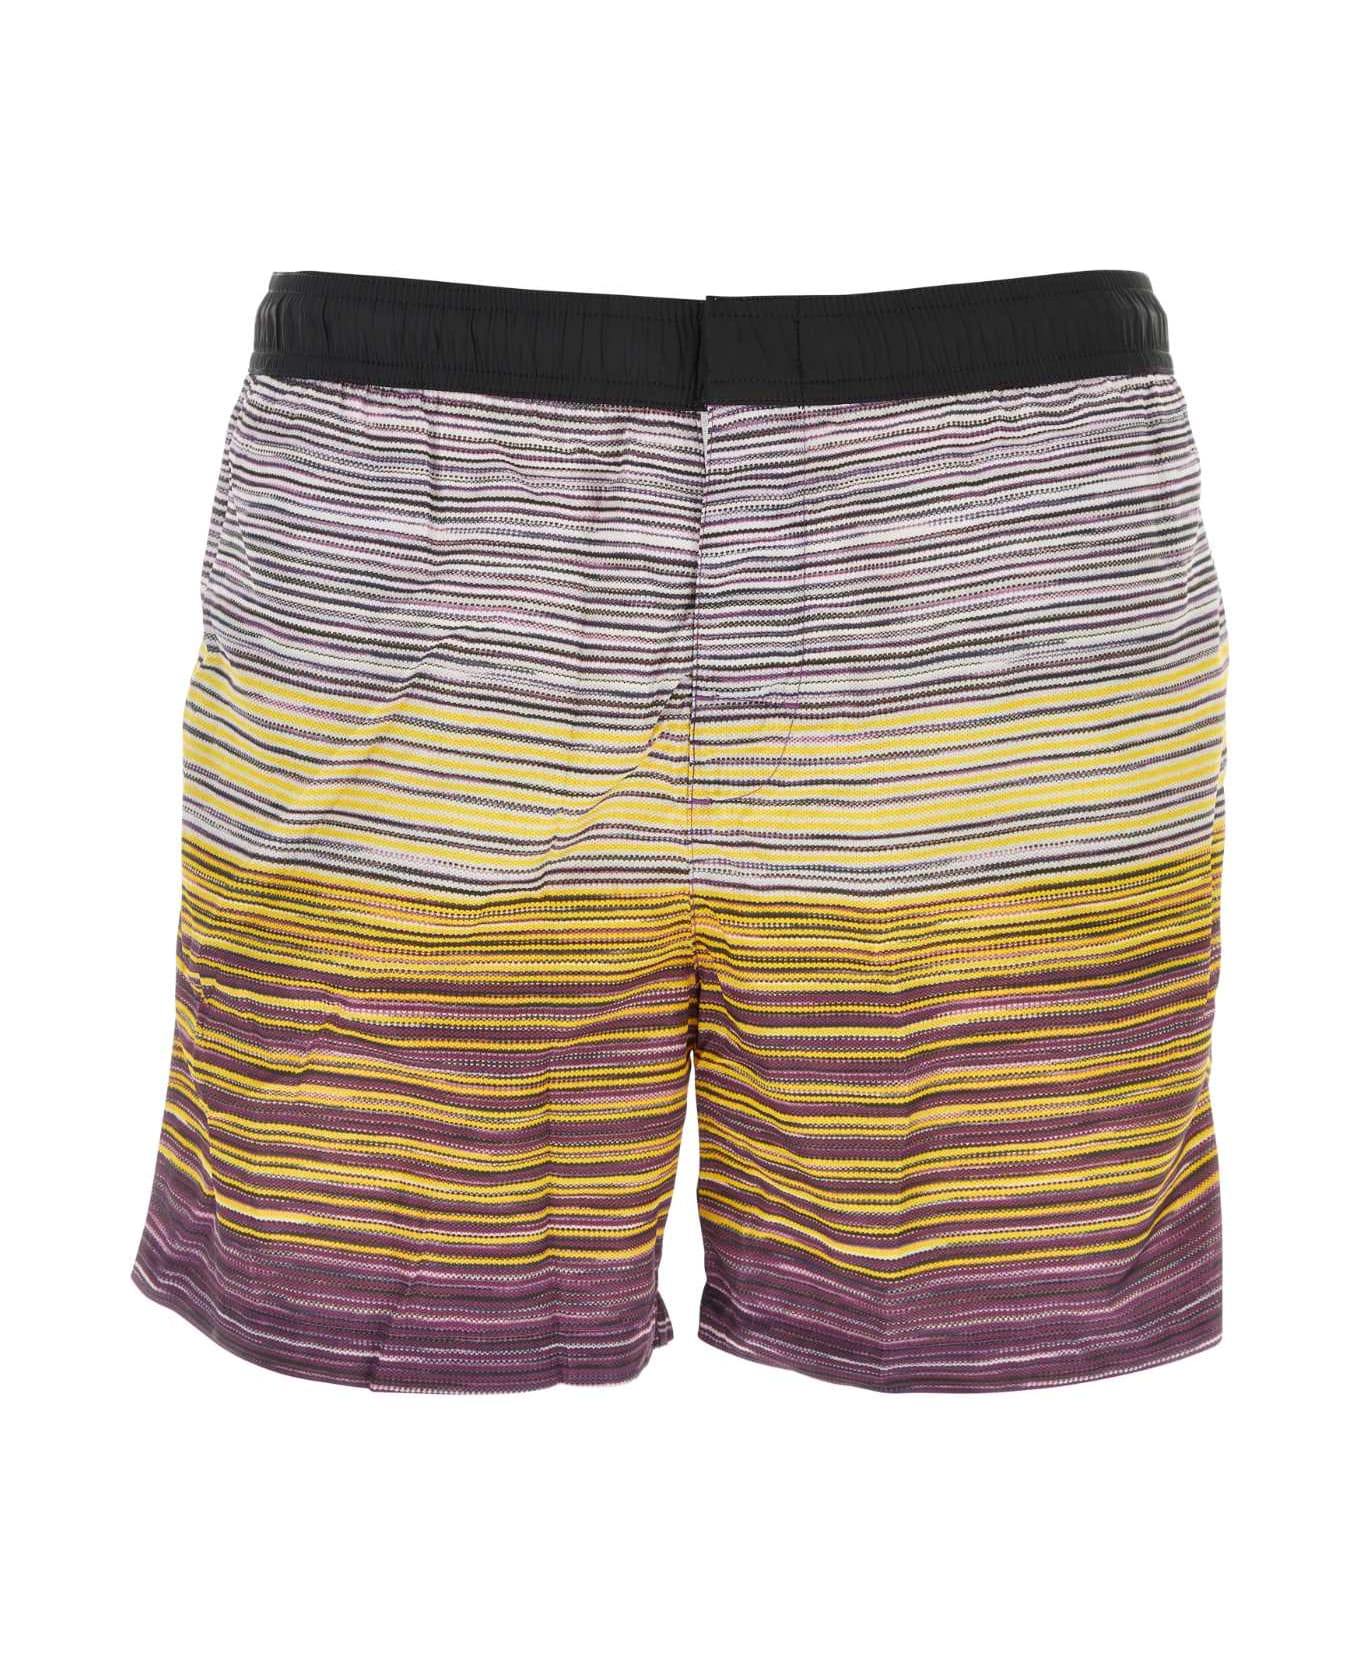 Missoni Printed Polyester Blend Swimming Shorts - YELVIOPUR